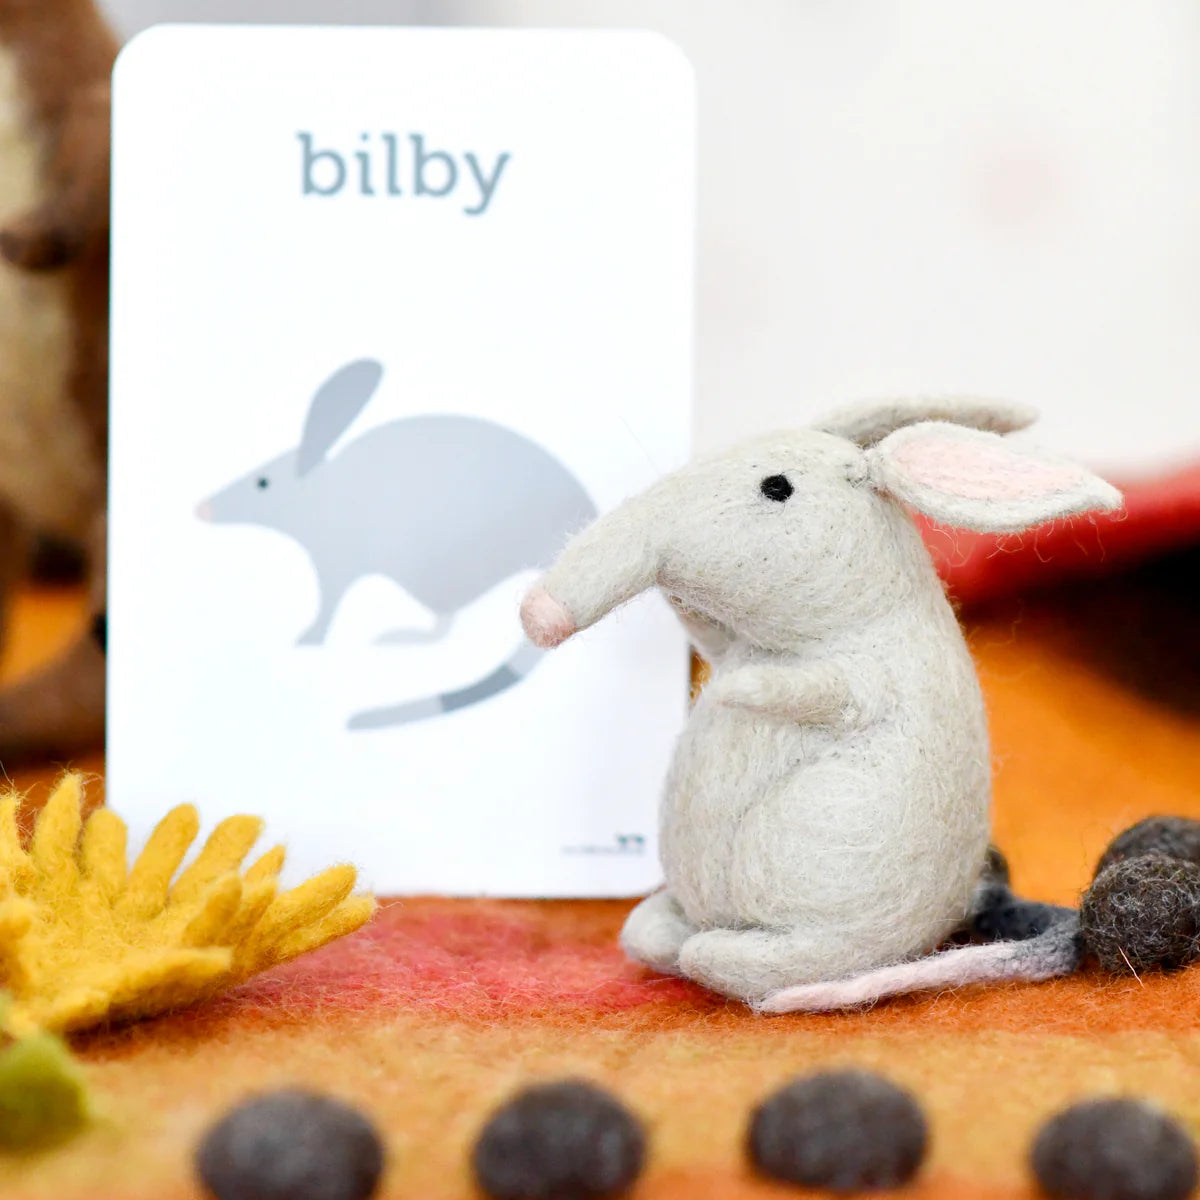 Felt Bilby Toy (Australian Animal)